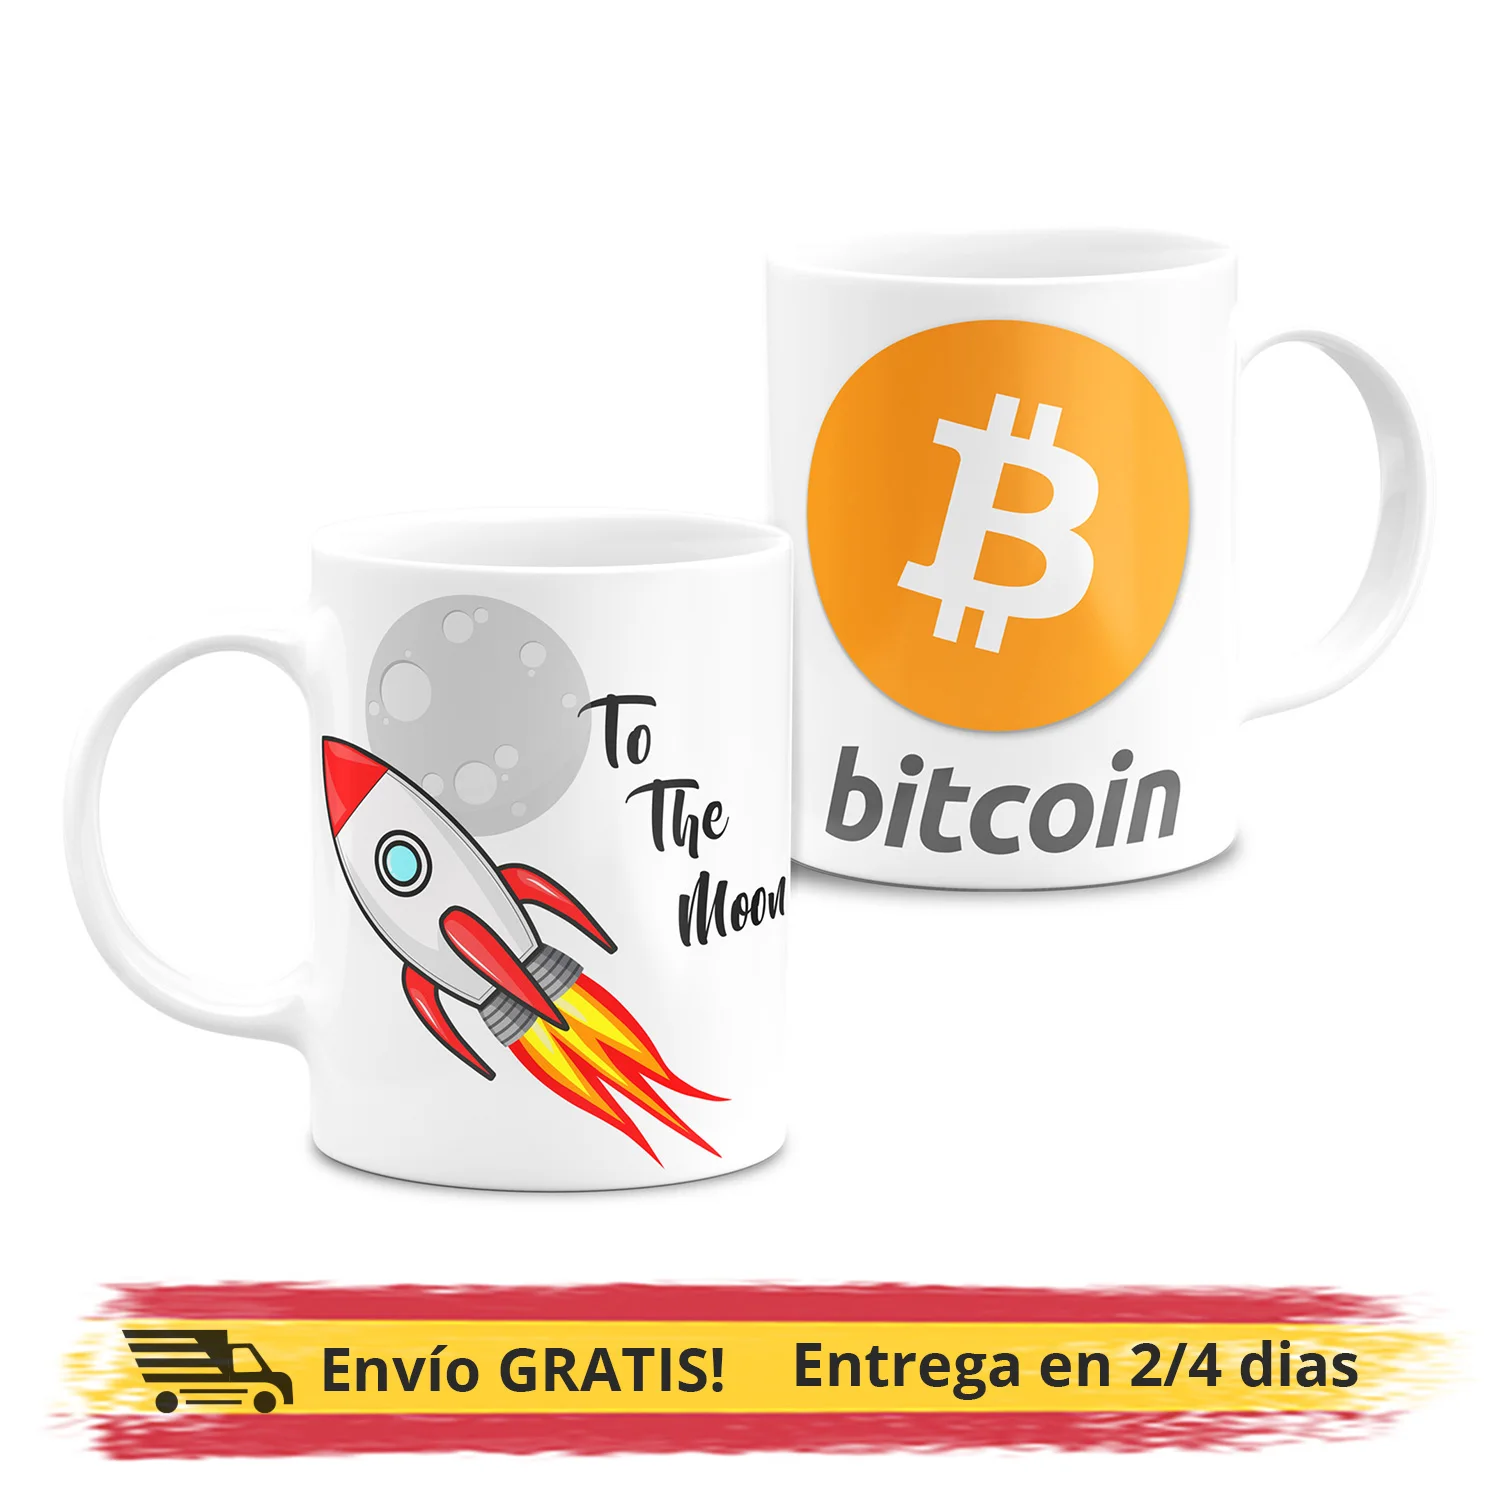 Bitcoin Taza Criptomonedas Bitcoin To The Moon Taza De Desayuno Cerámica Blanca 11oz Regalos Originales 